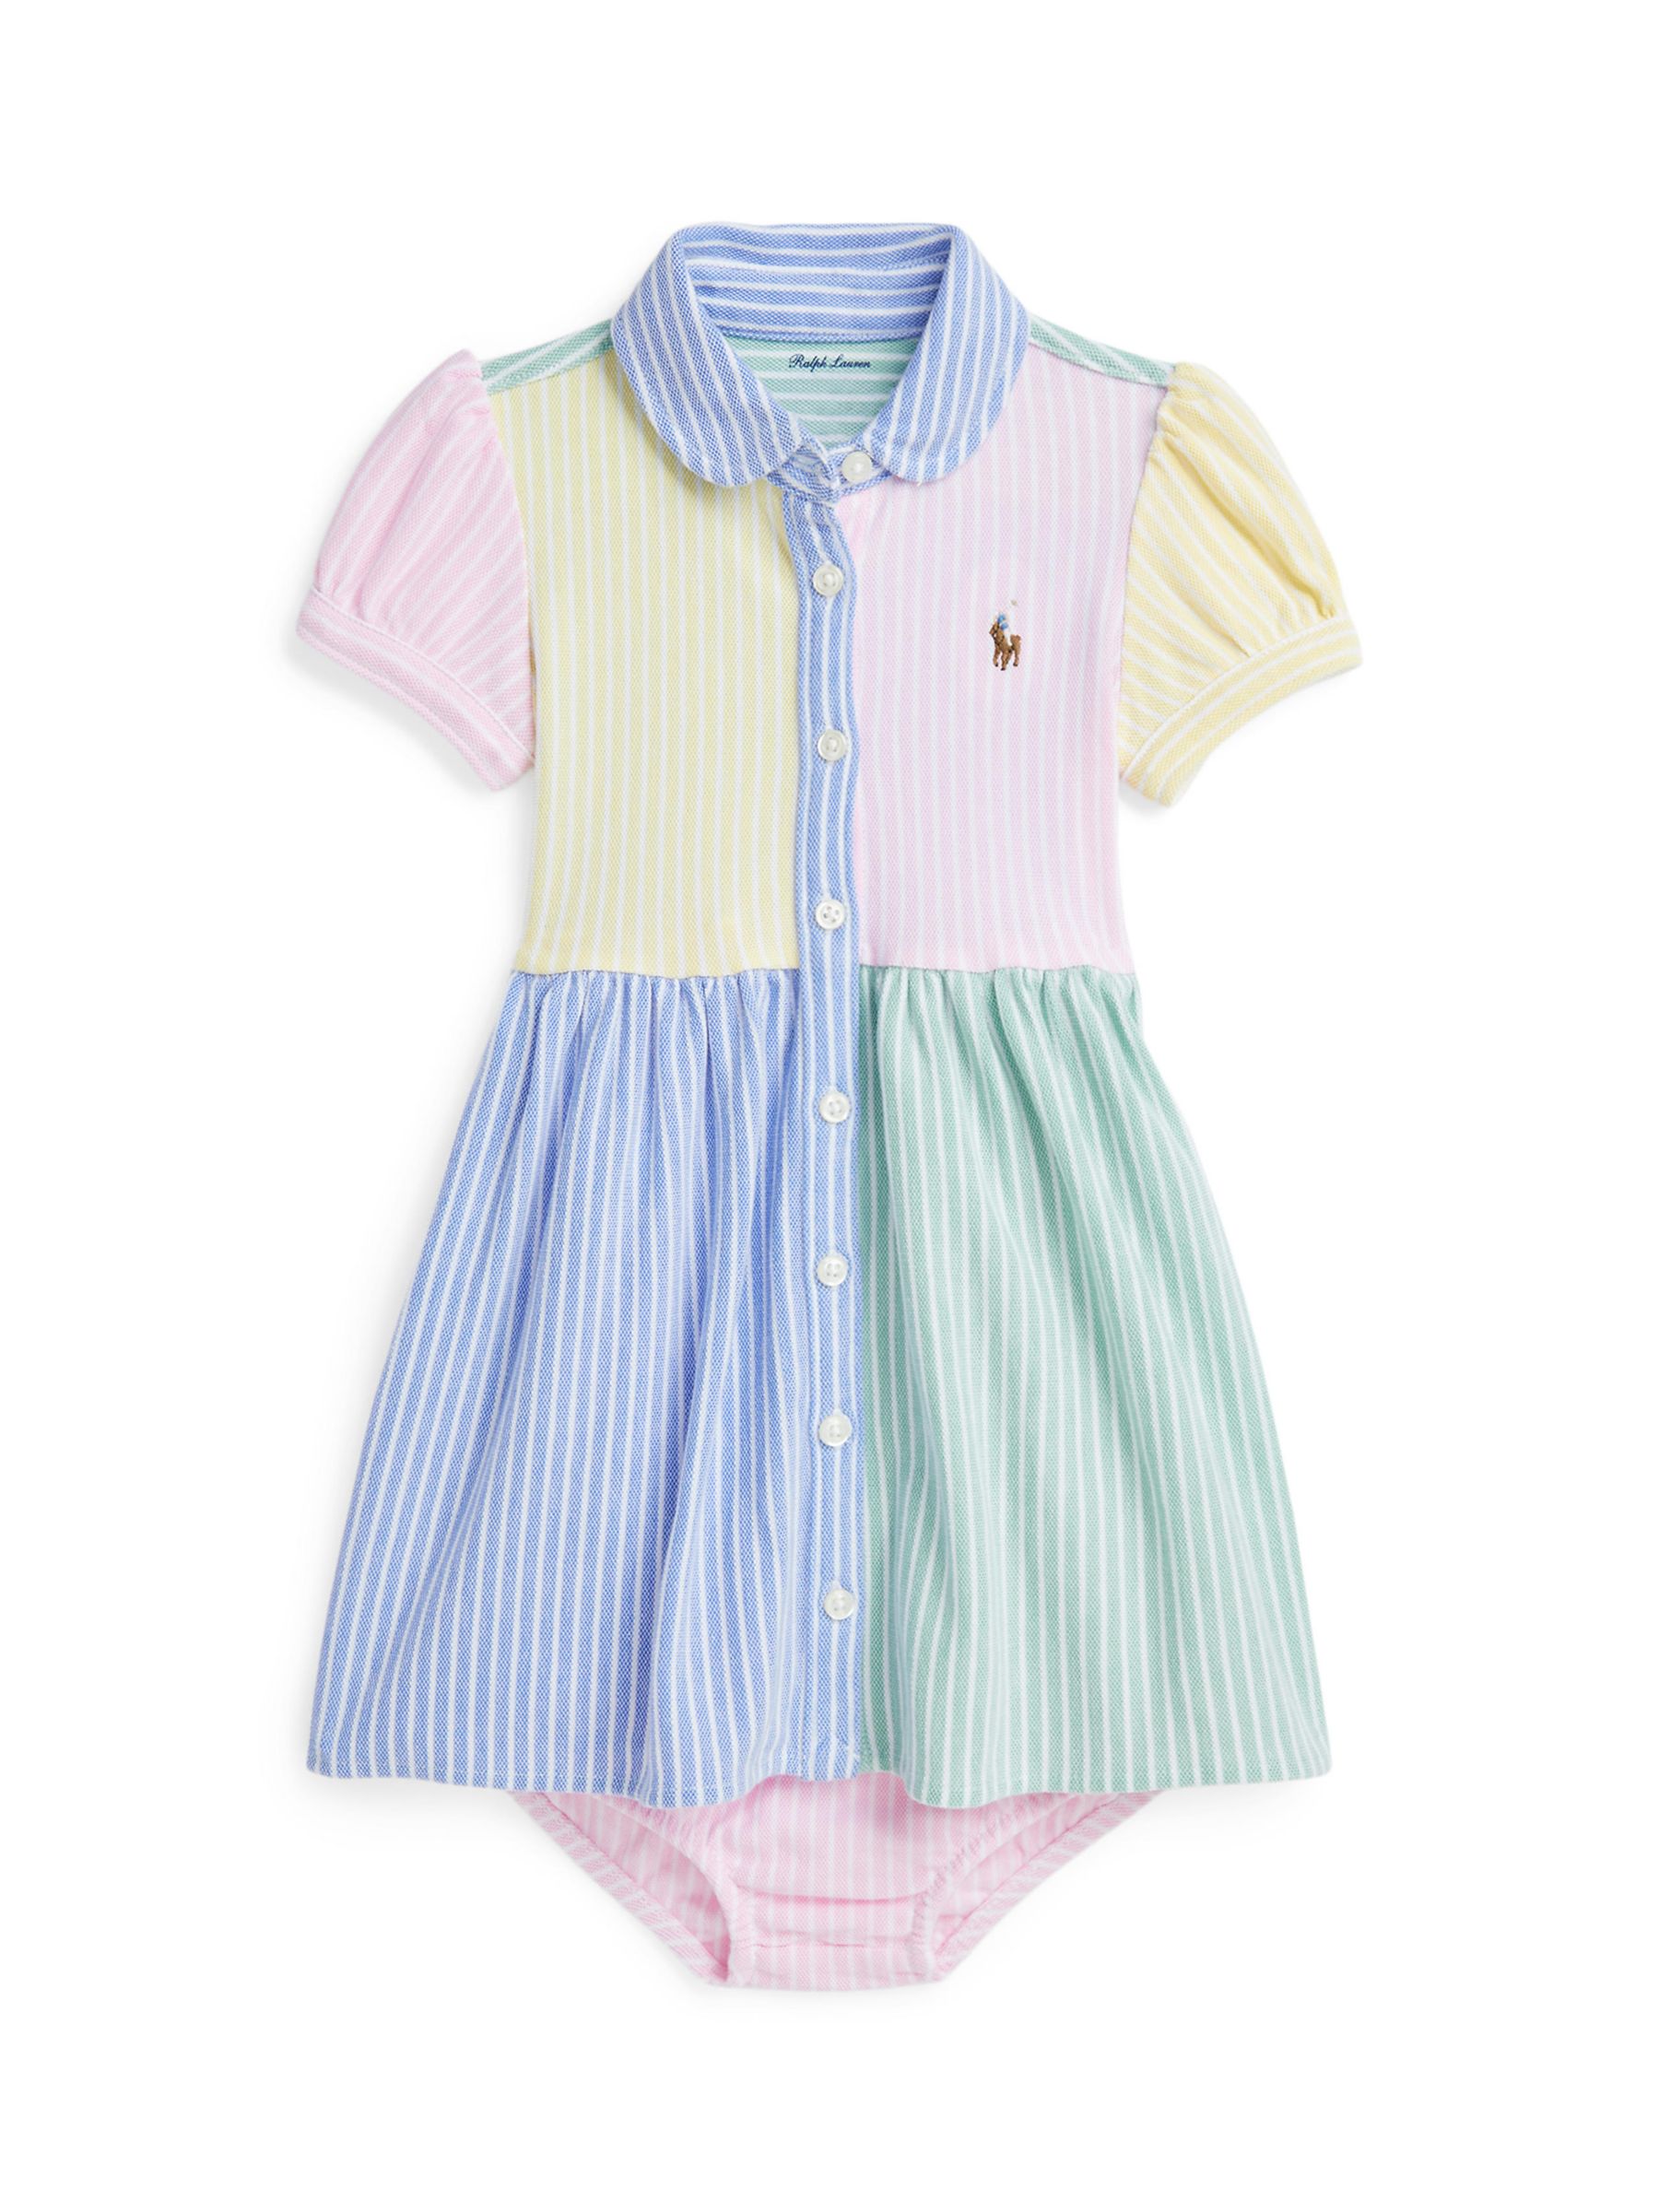 Ralph Lauren Baby Day Colour Block Stripe Shirt Dress & Bloomer Set, Celadon/Multi, 9 months